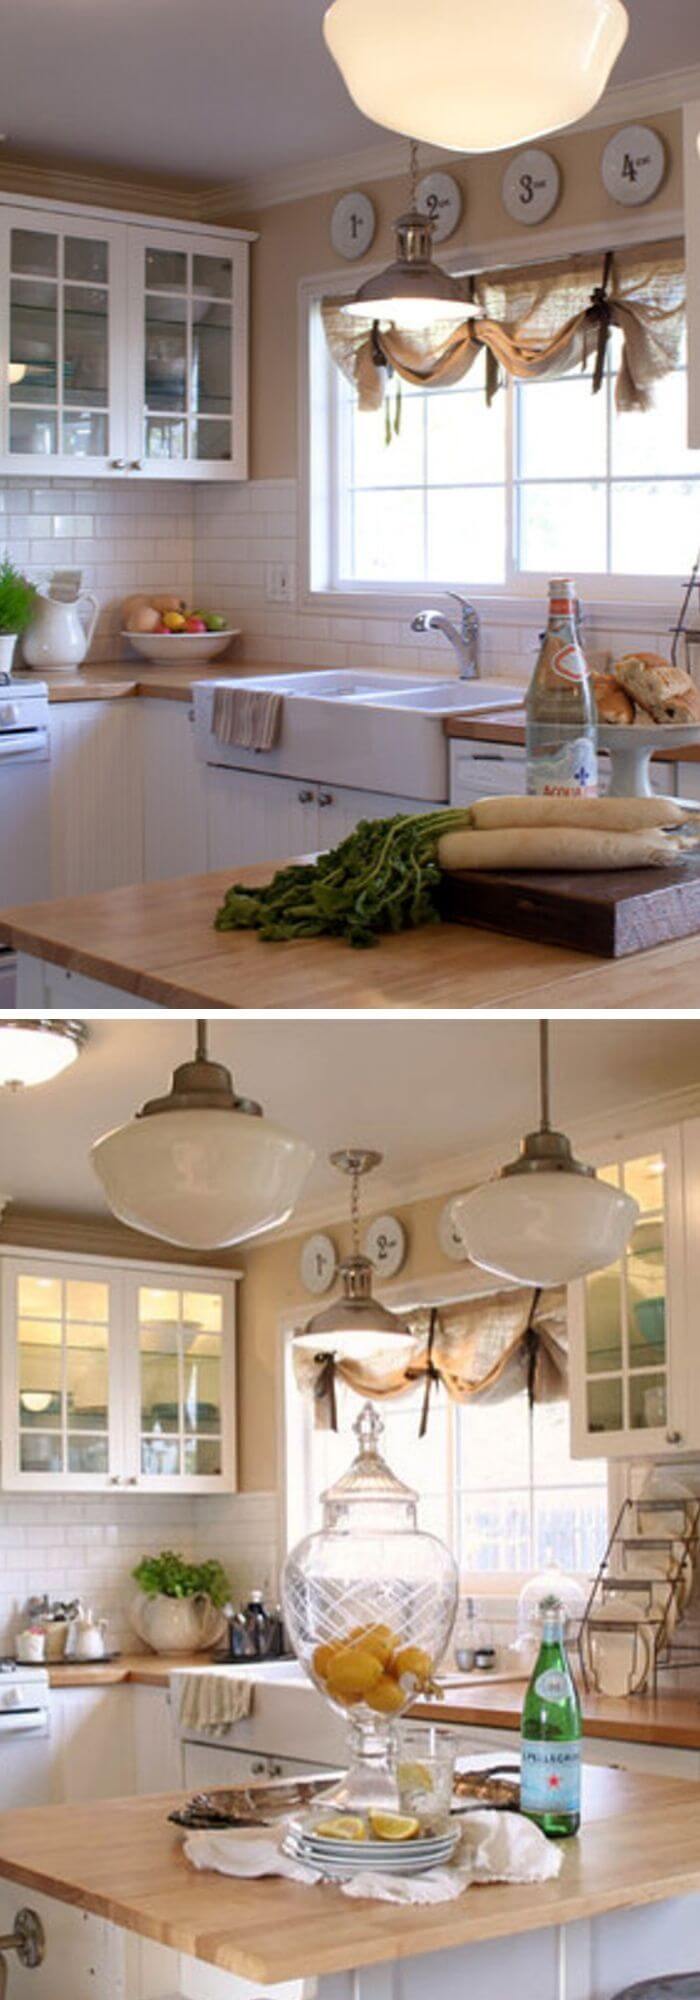 11 farmhouse kitchen cabinet ideas